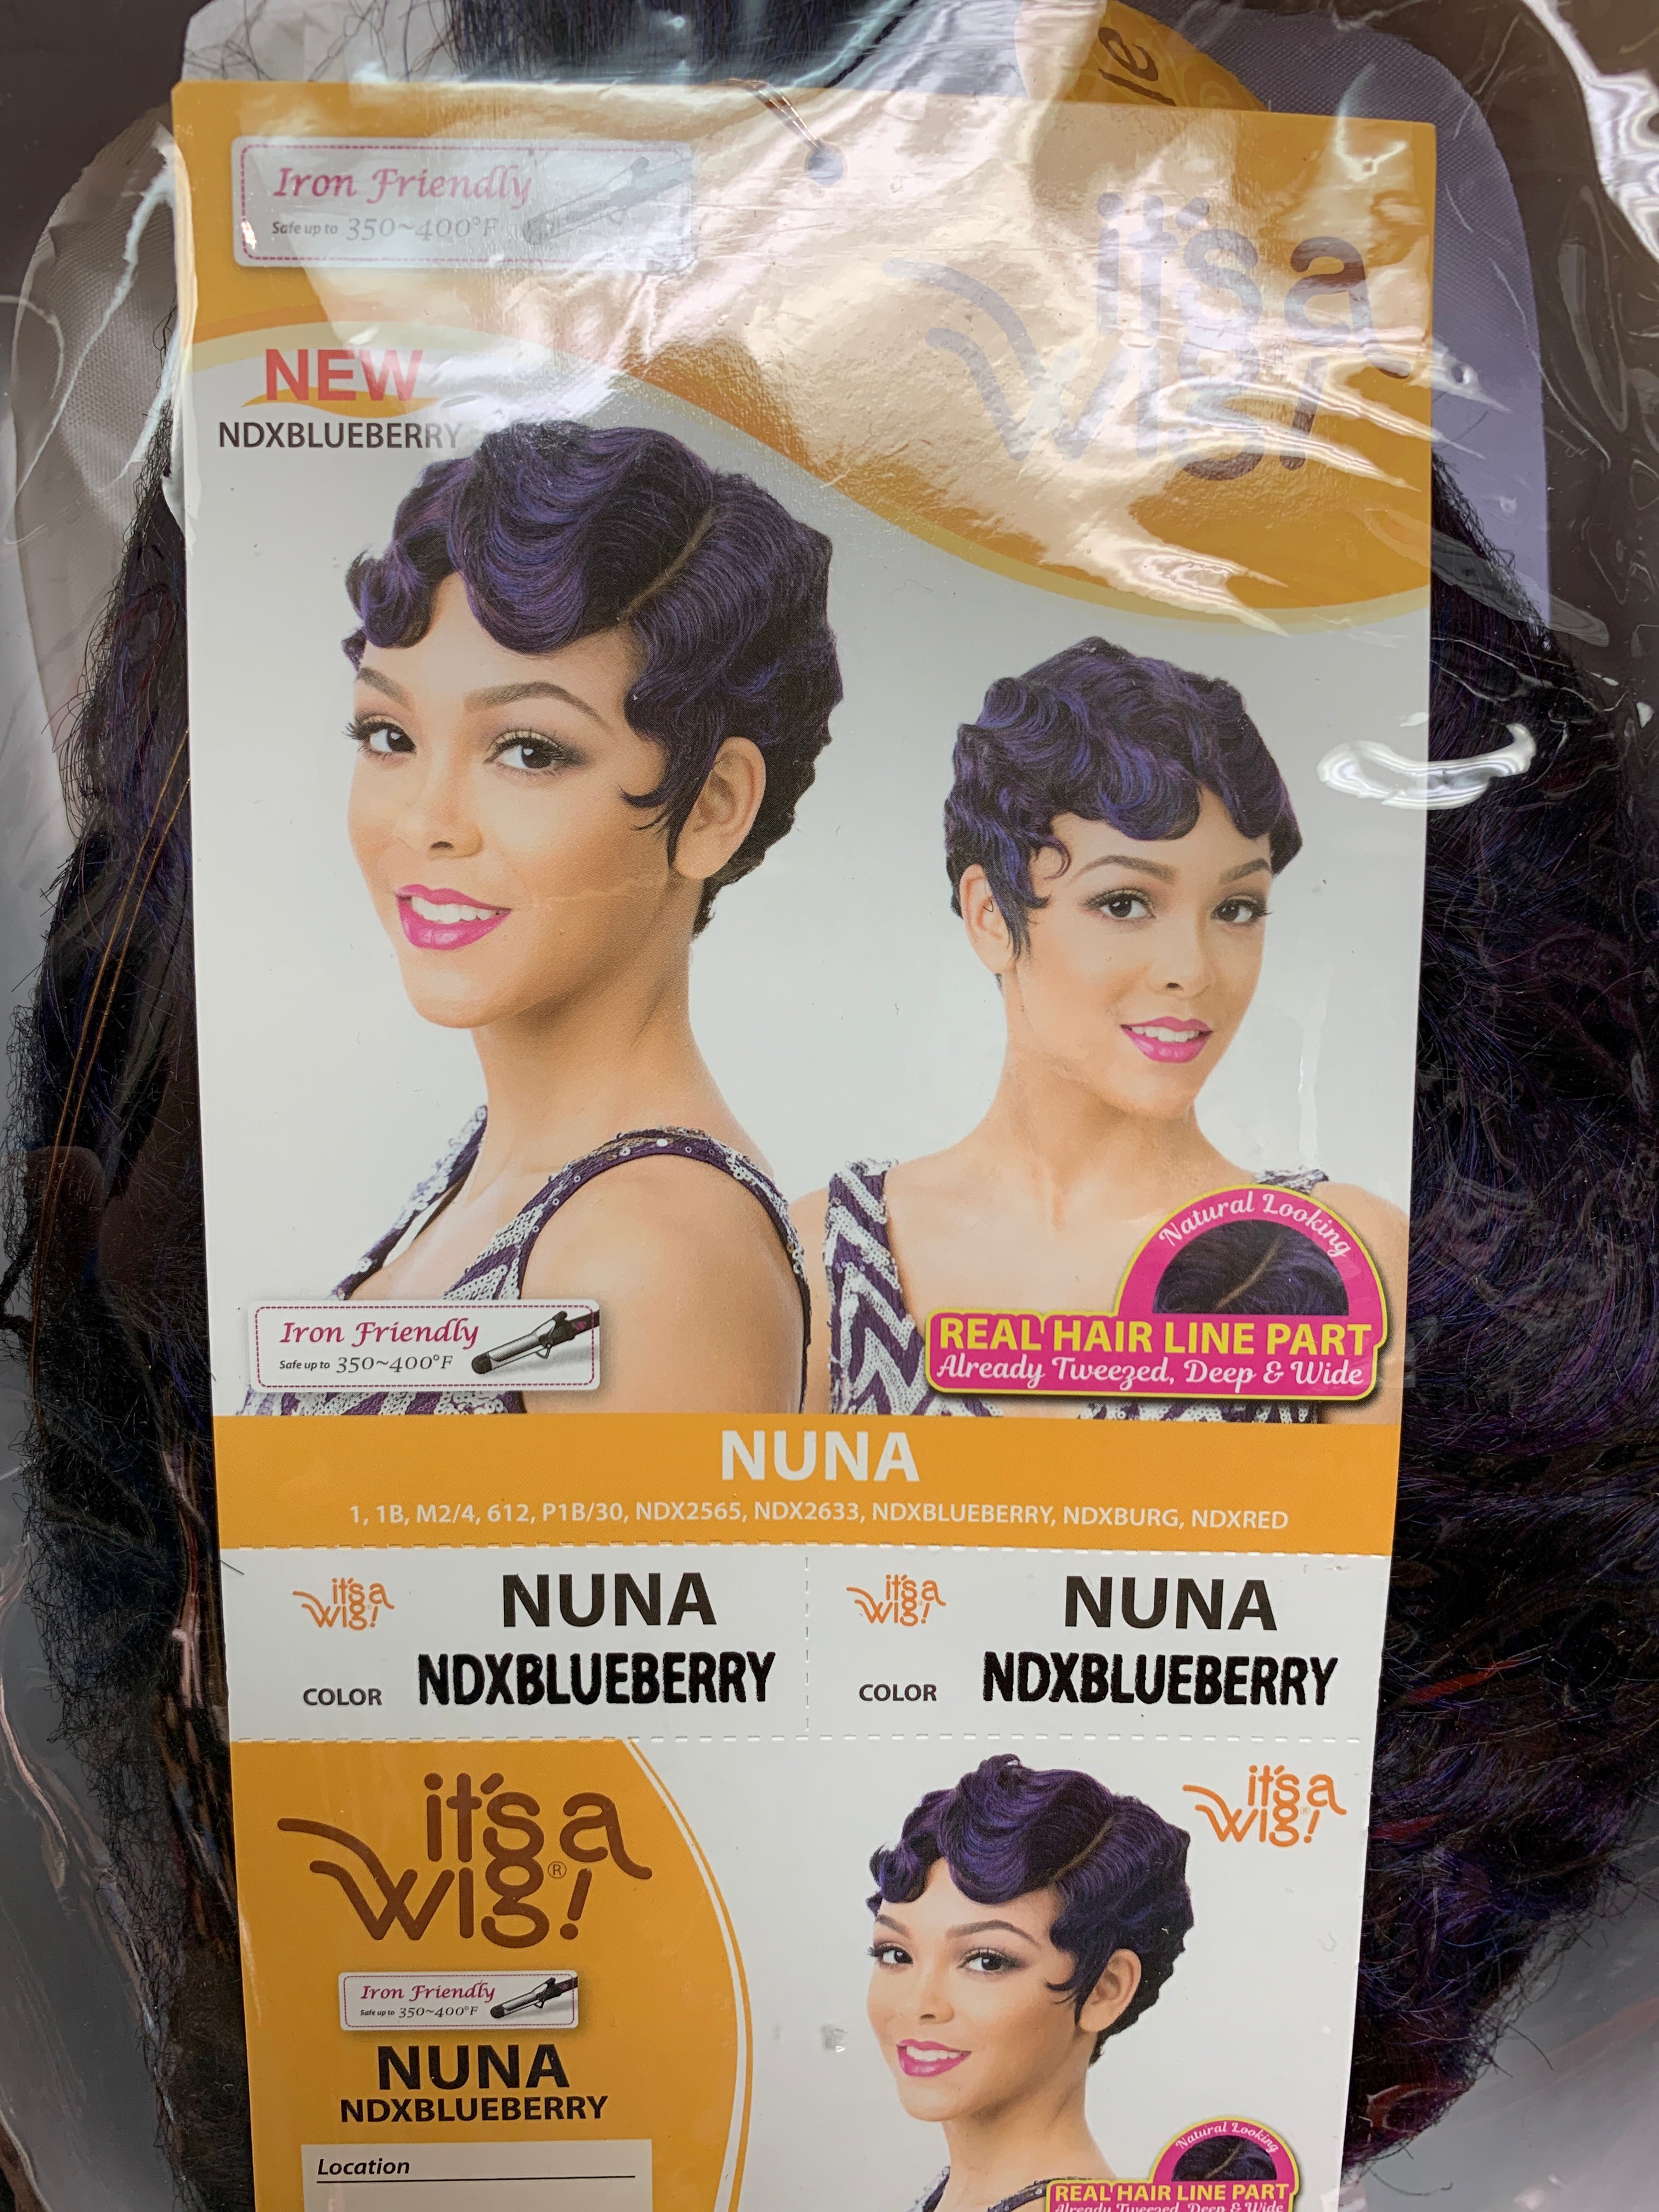 It’s a wig Nuna